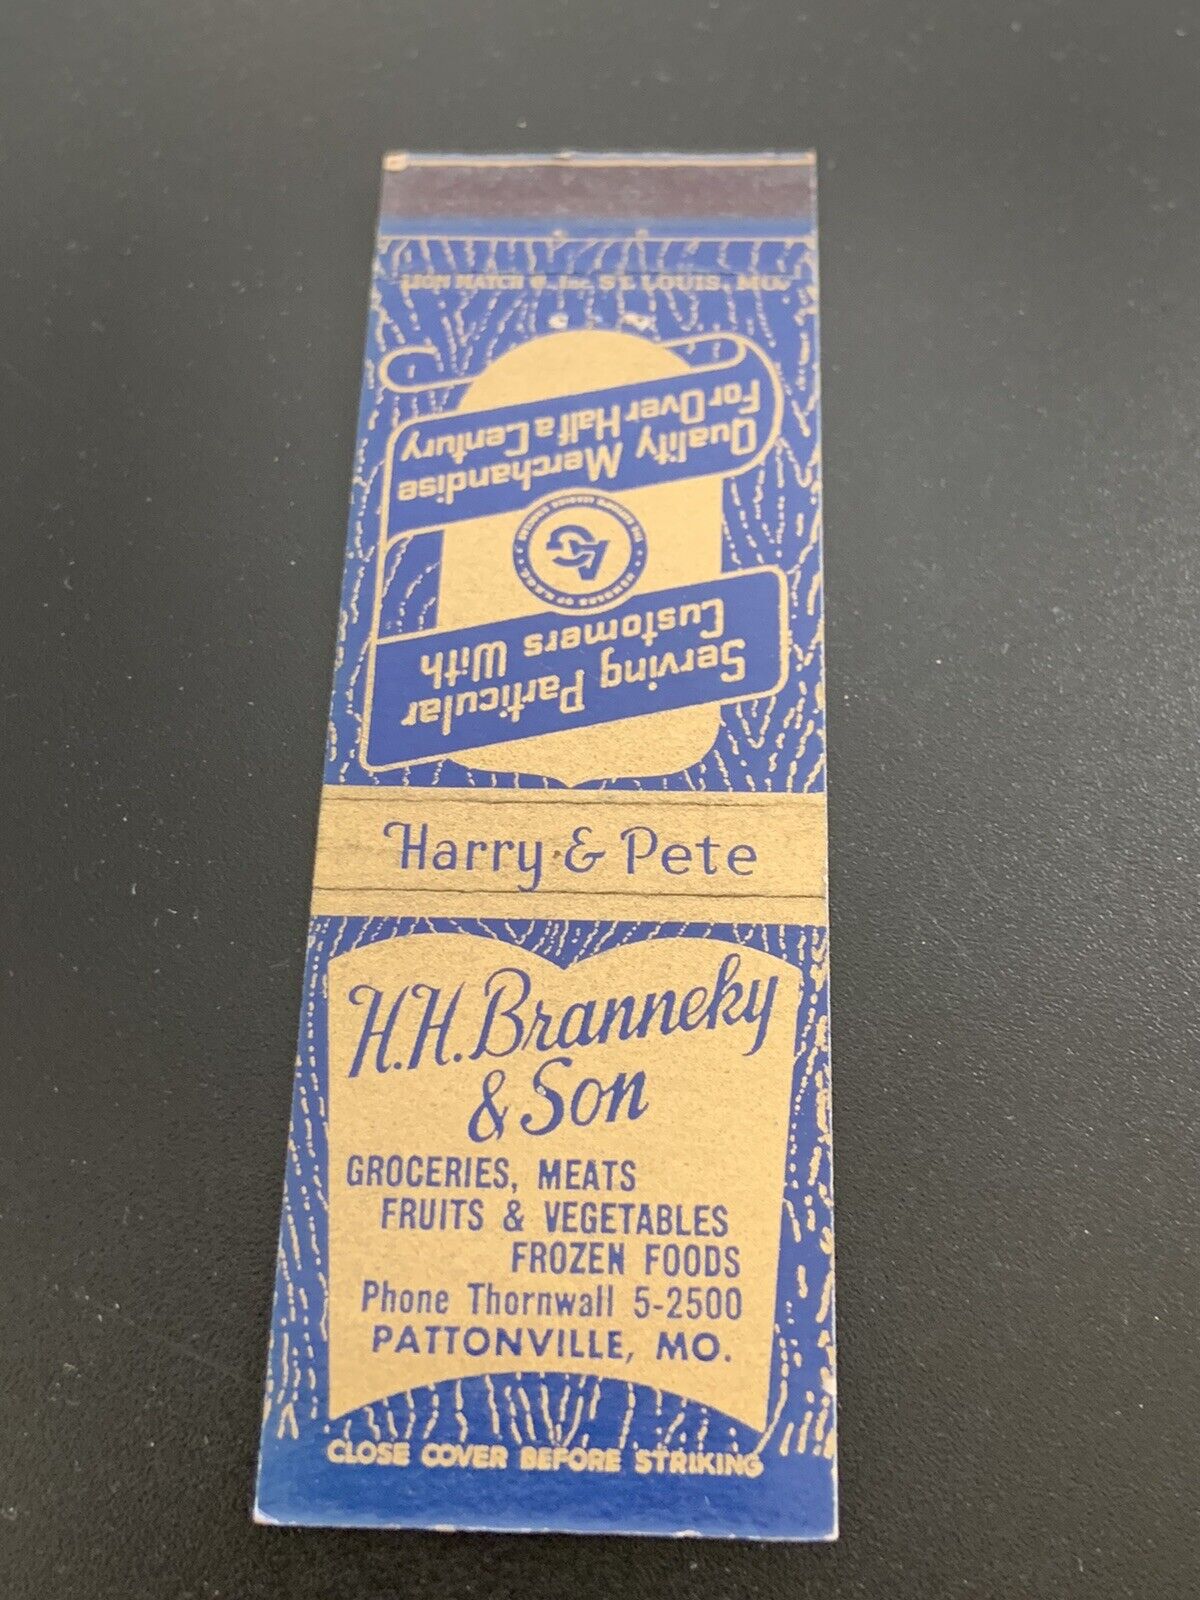 Vintage Missouri Matchbook: “HH Branneky & Sons” Pattonville, MO